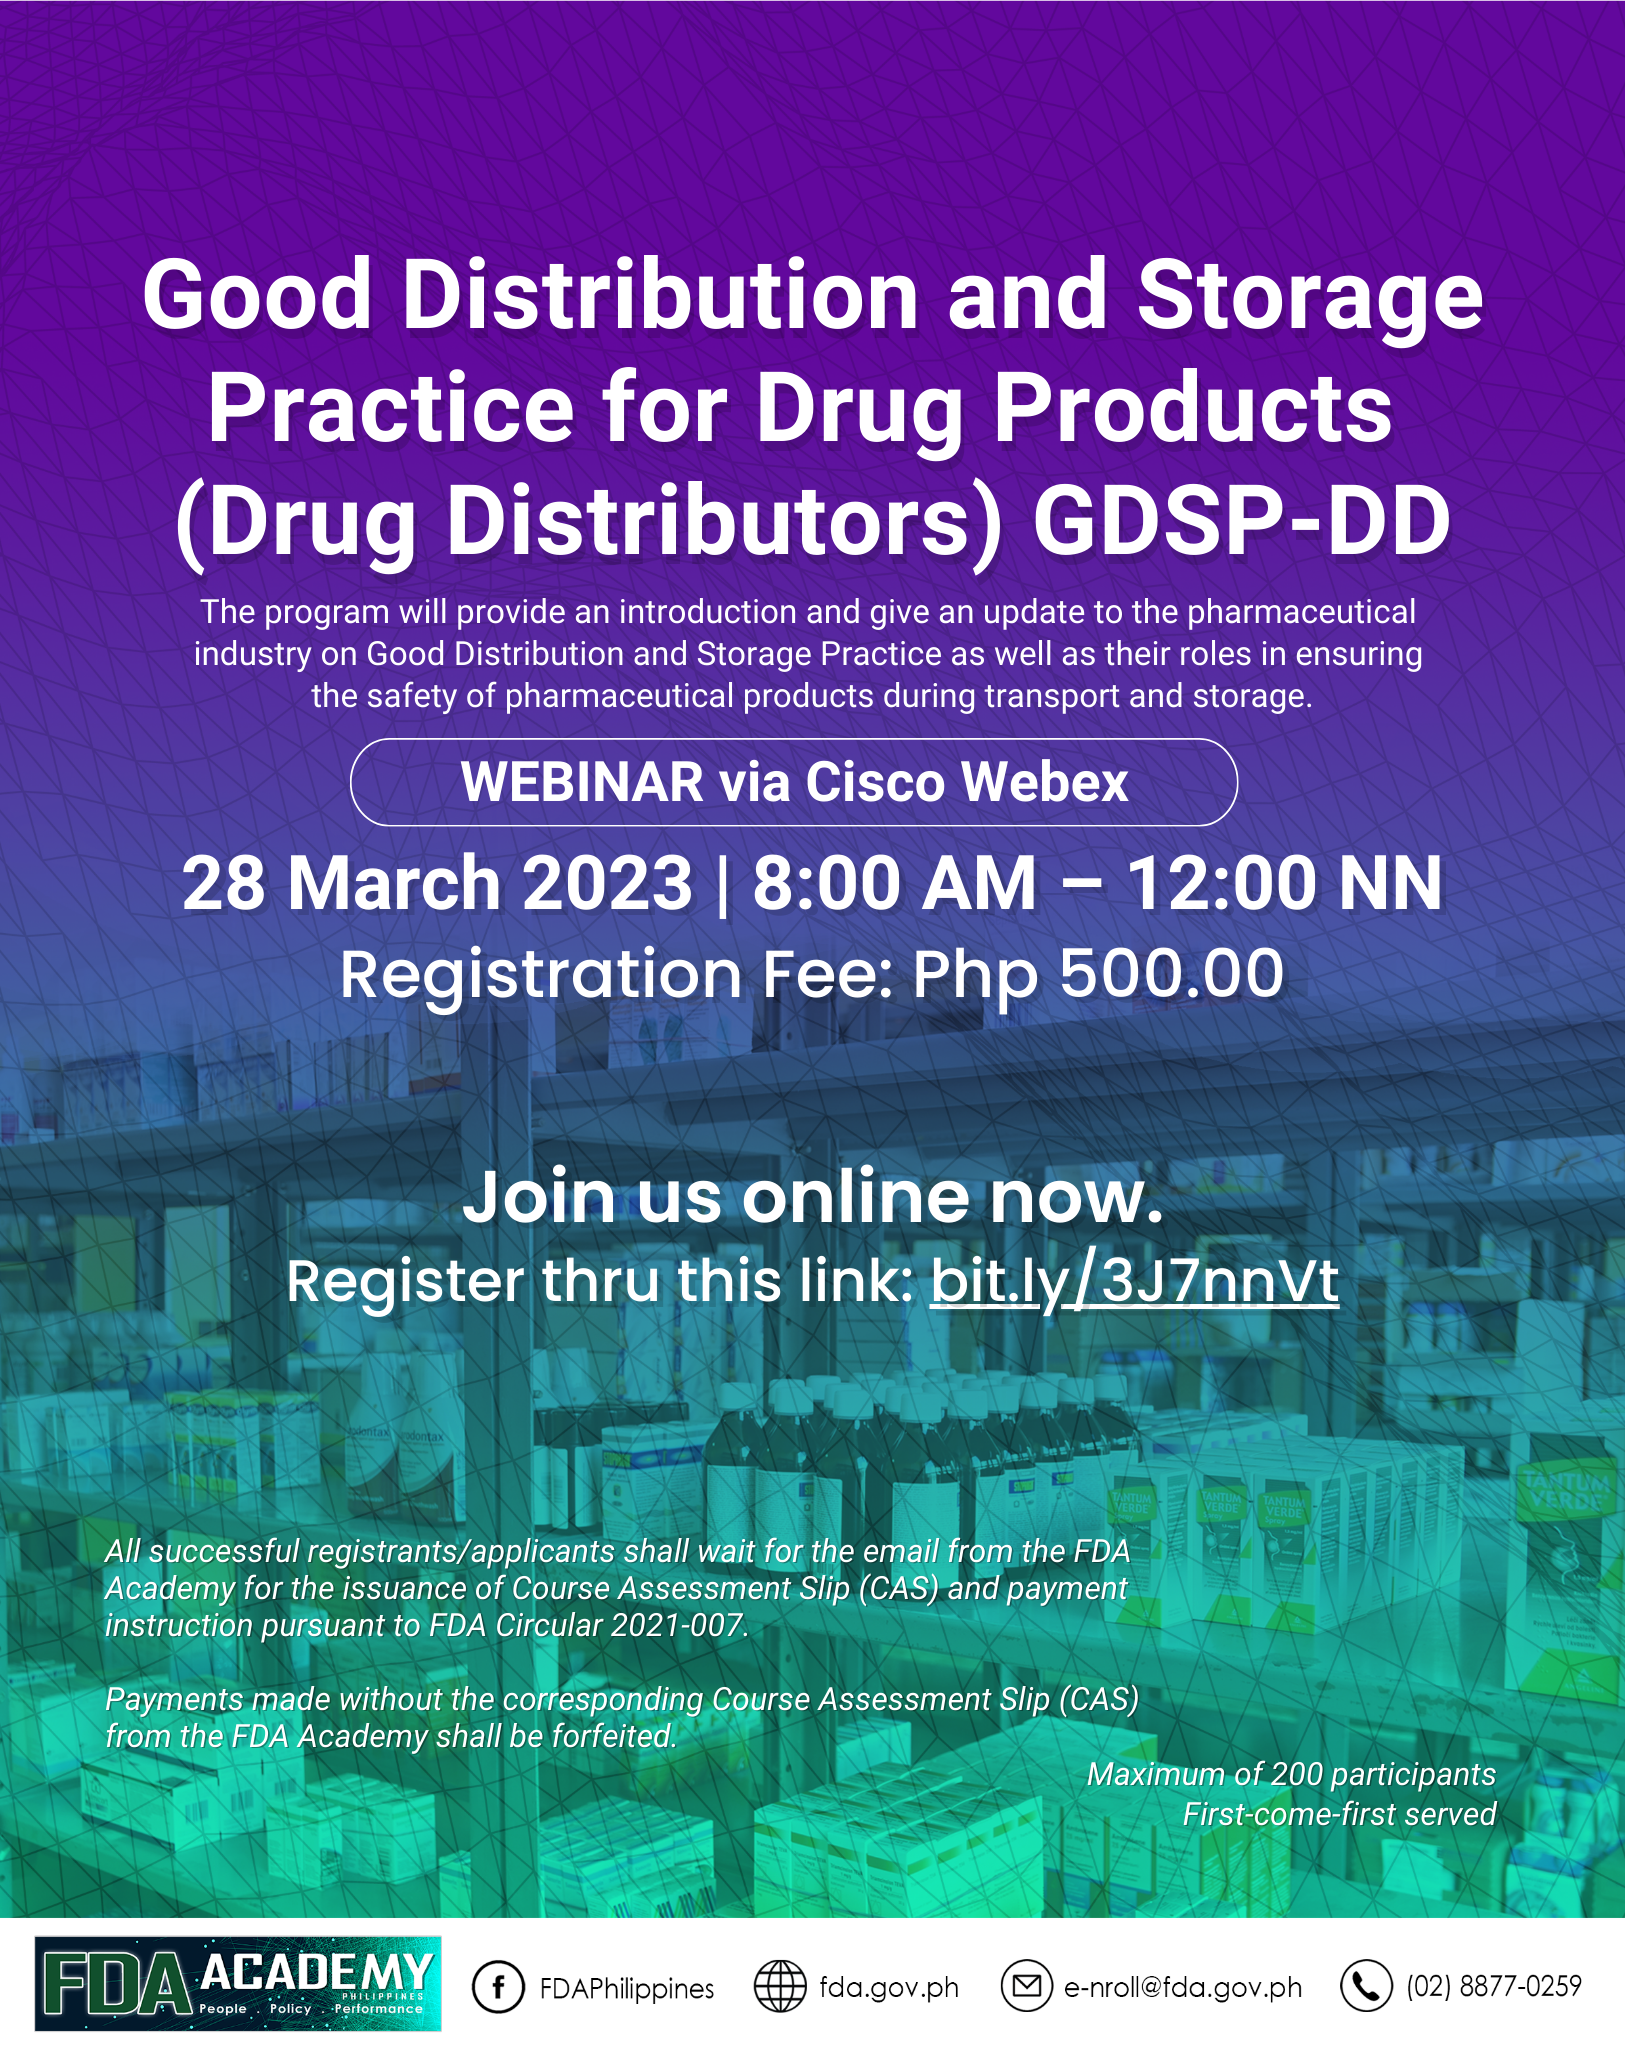 GOOD DISTRIBUTION AND STORAGE PRACTICE FOR DRUG PRODUCTS (DRUG DISTRIBUTORS) GDSP-DD